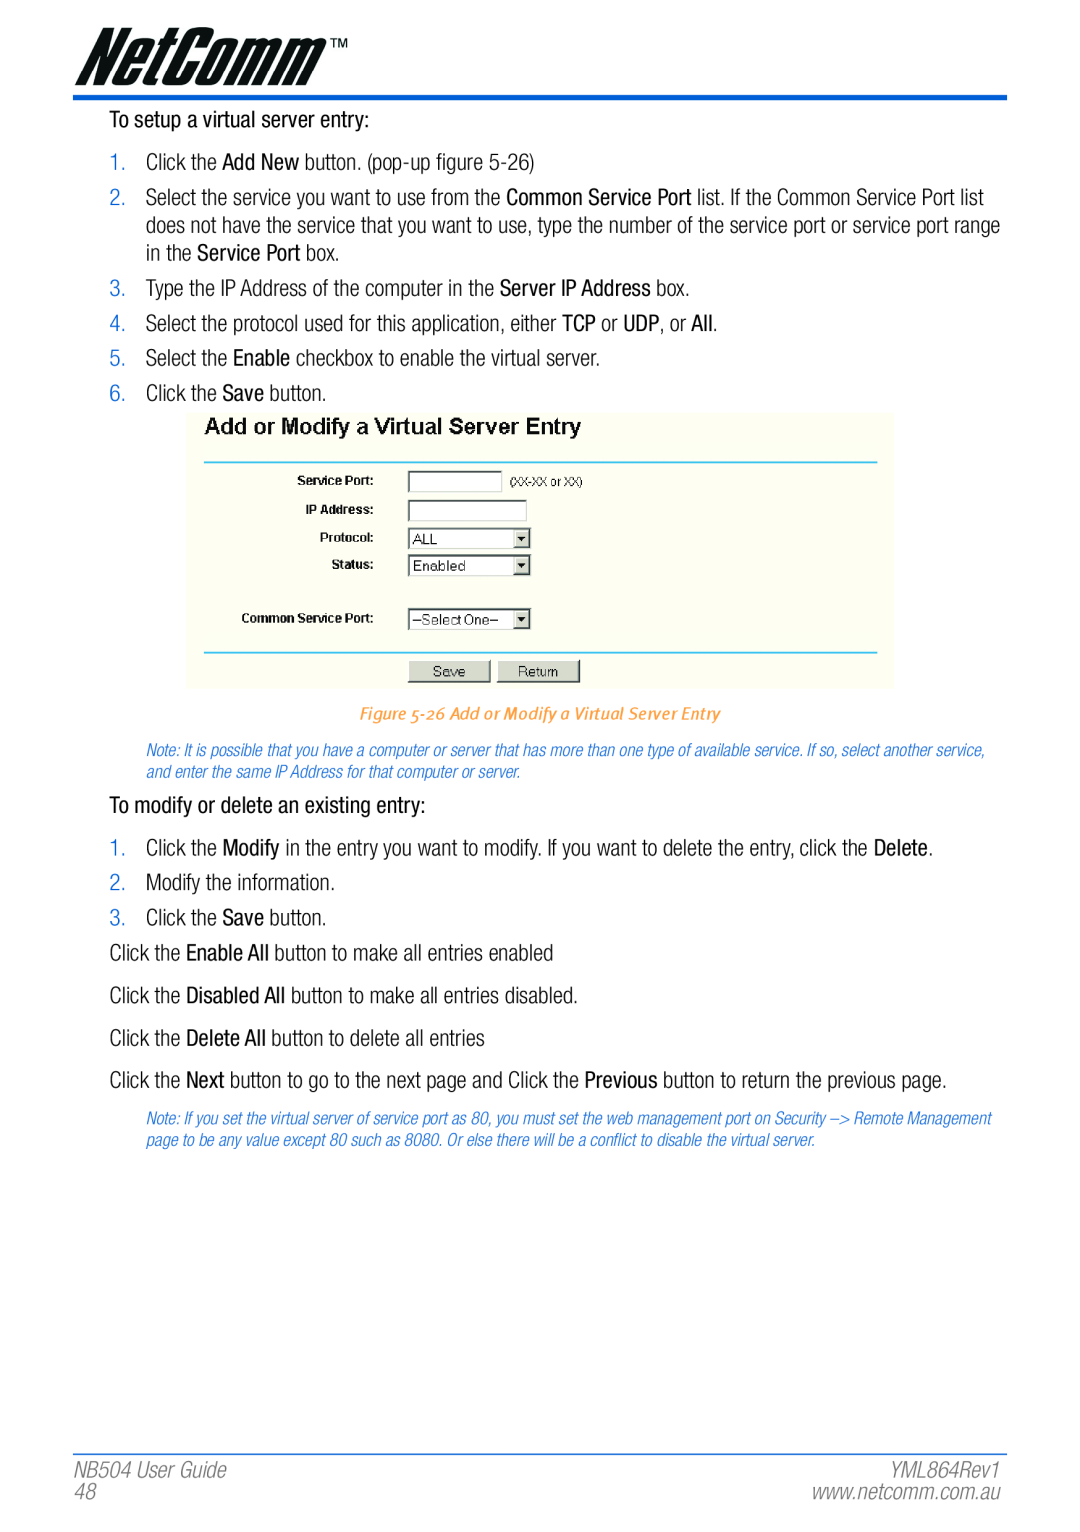 NetComm manual NB504 User Guide, 26 Add or Modify a Virtual Server Entry 